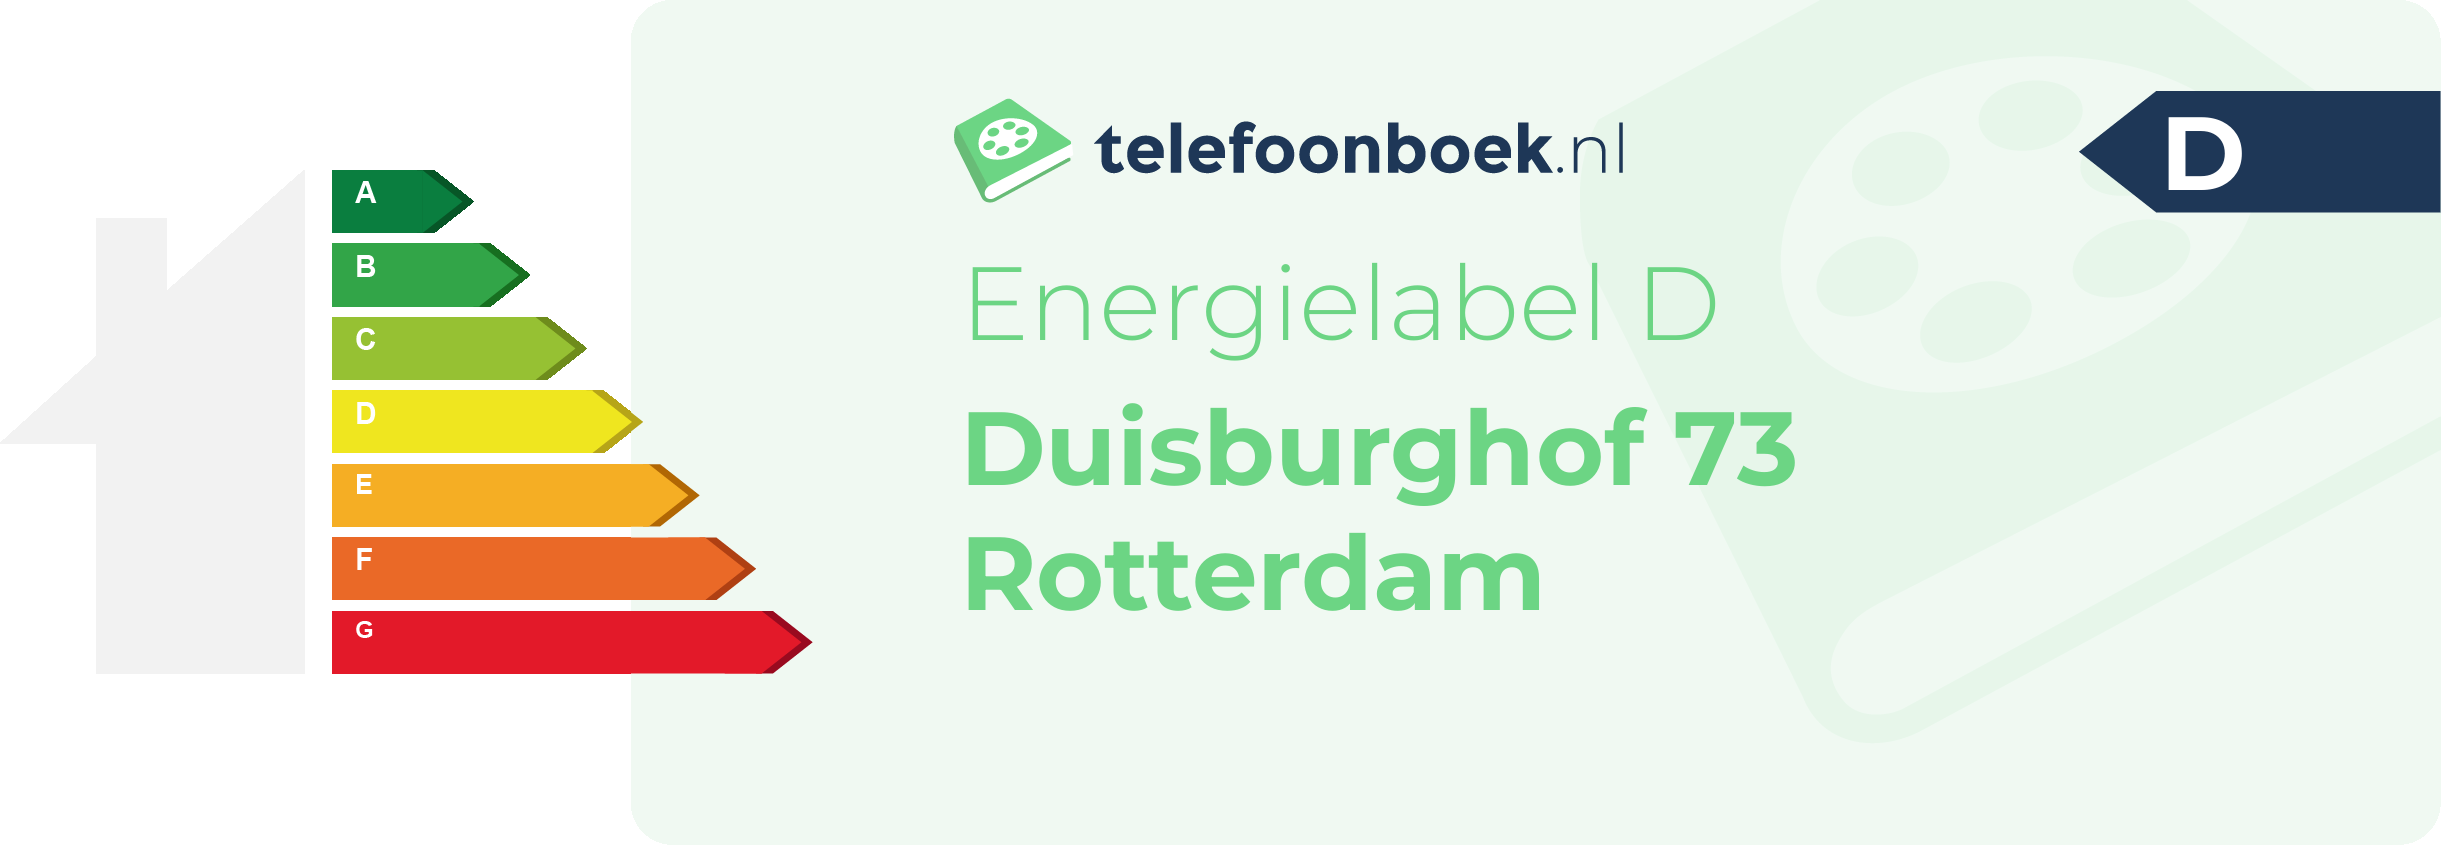 Energielabel Duisburghof 73 Rotterdam